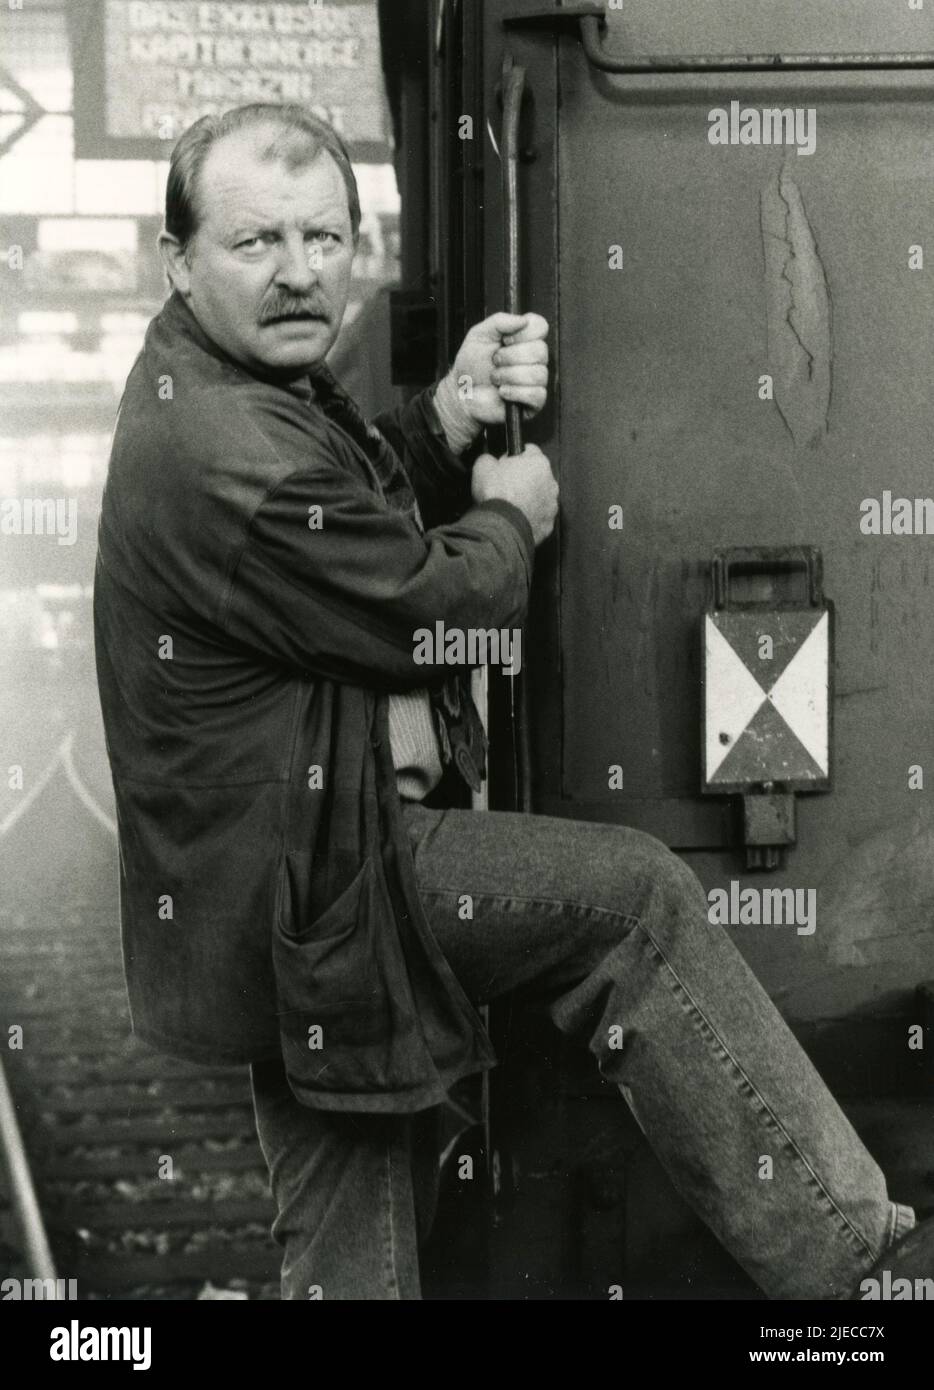 L'attore tedesco Eberhard Feik nella serie TV A Man on the Train (Ein Mann am Zug), Germania 1993 Foto Stock